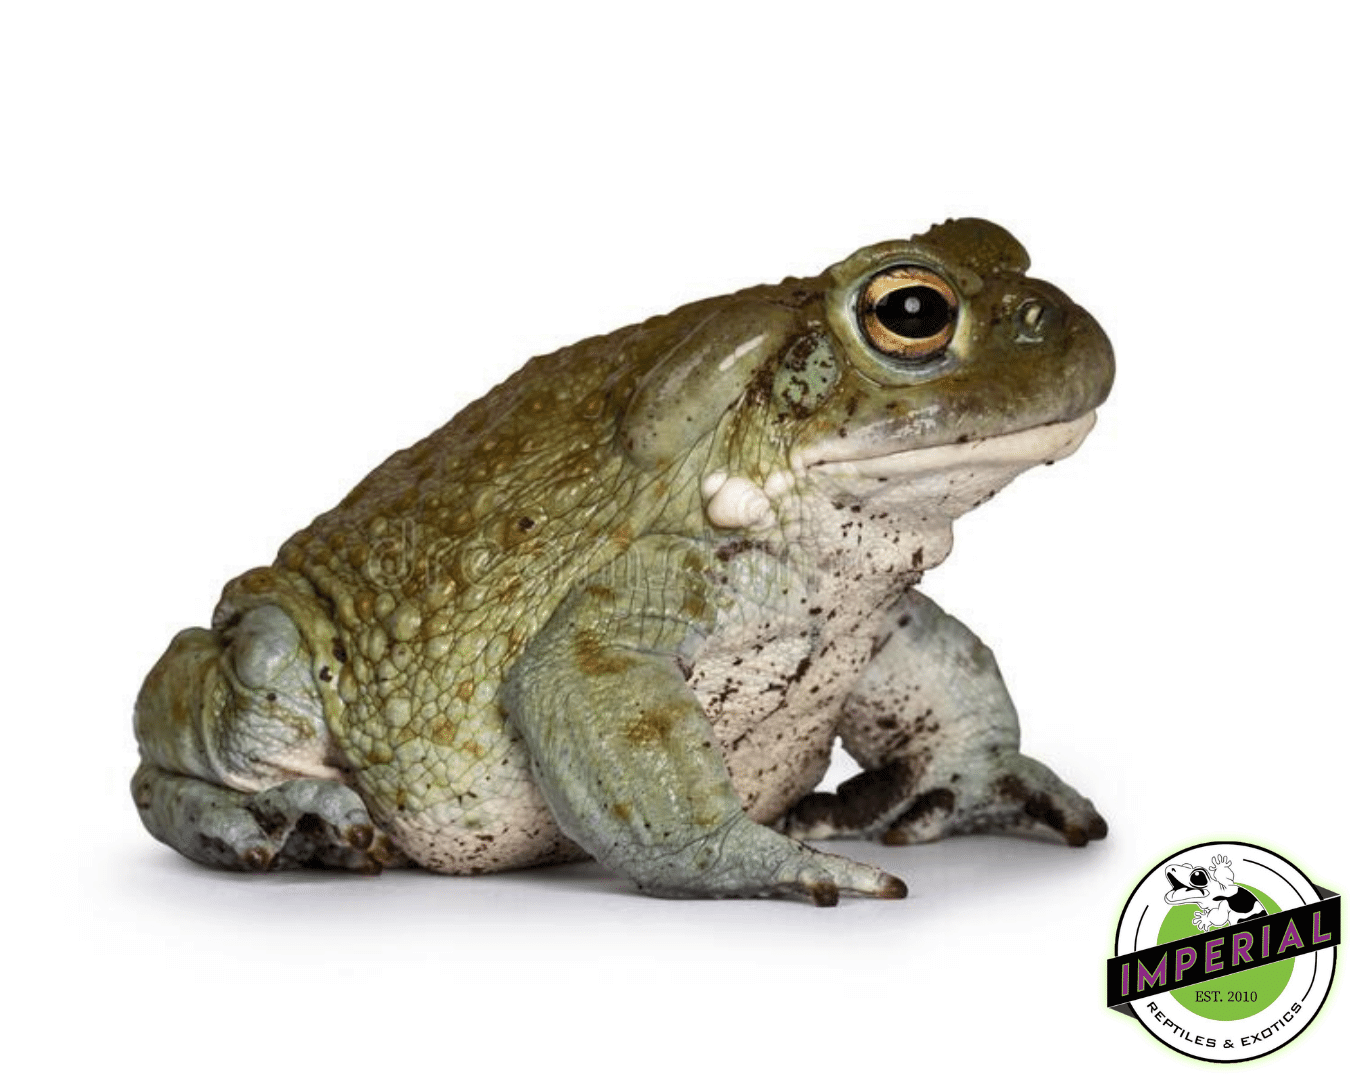 Colorado River Toad for sale, buy amphibians online